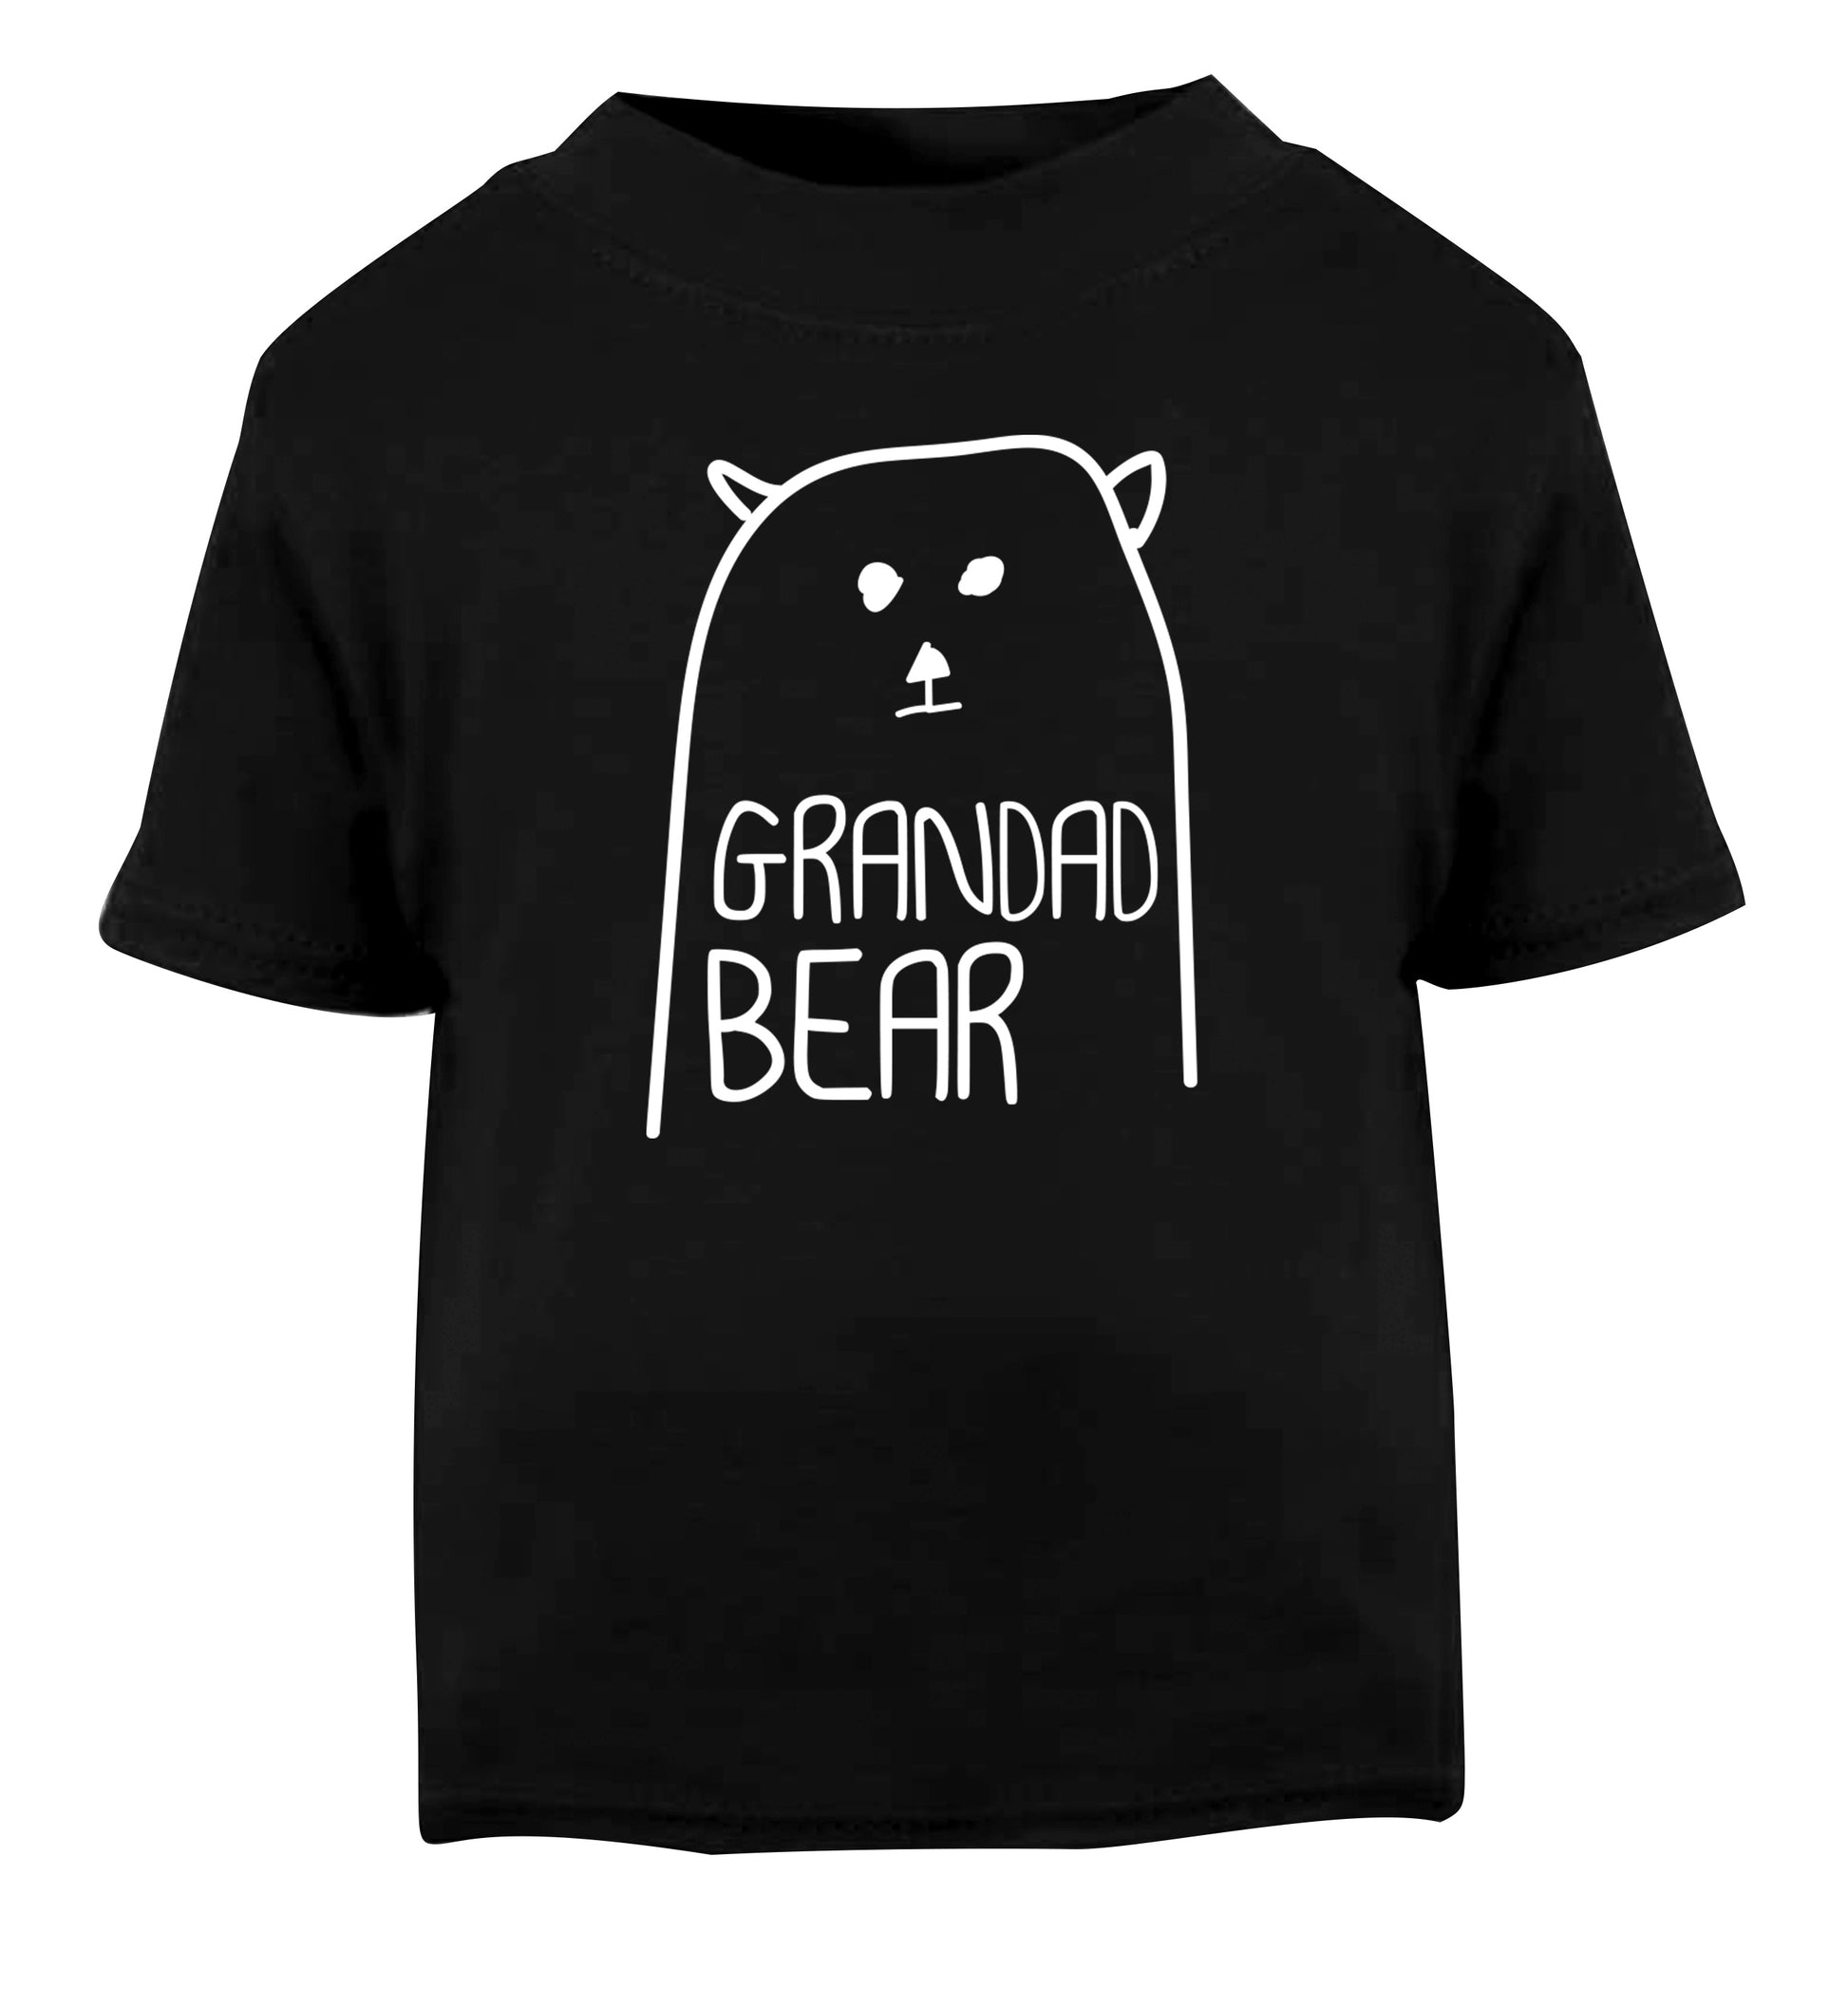 Grandad bear Black Baby Toddler Tshirt 2 years